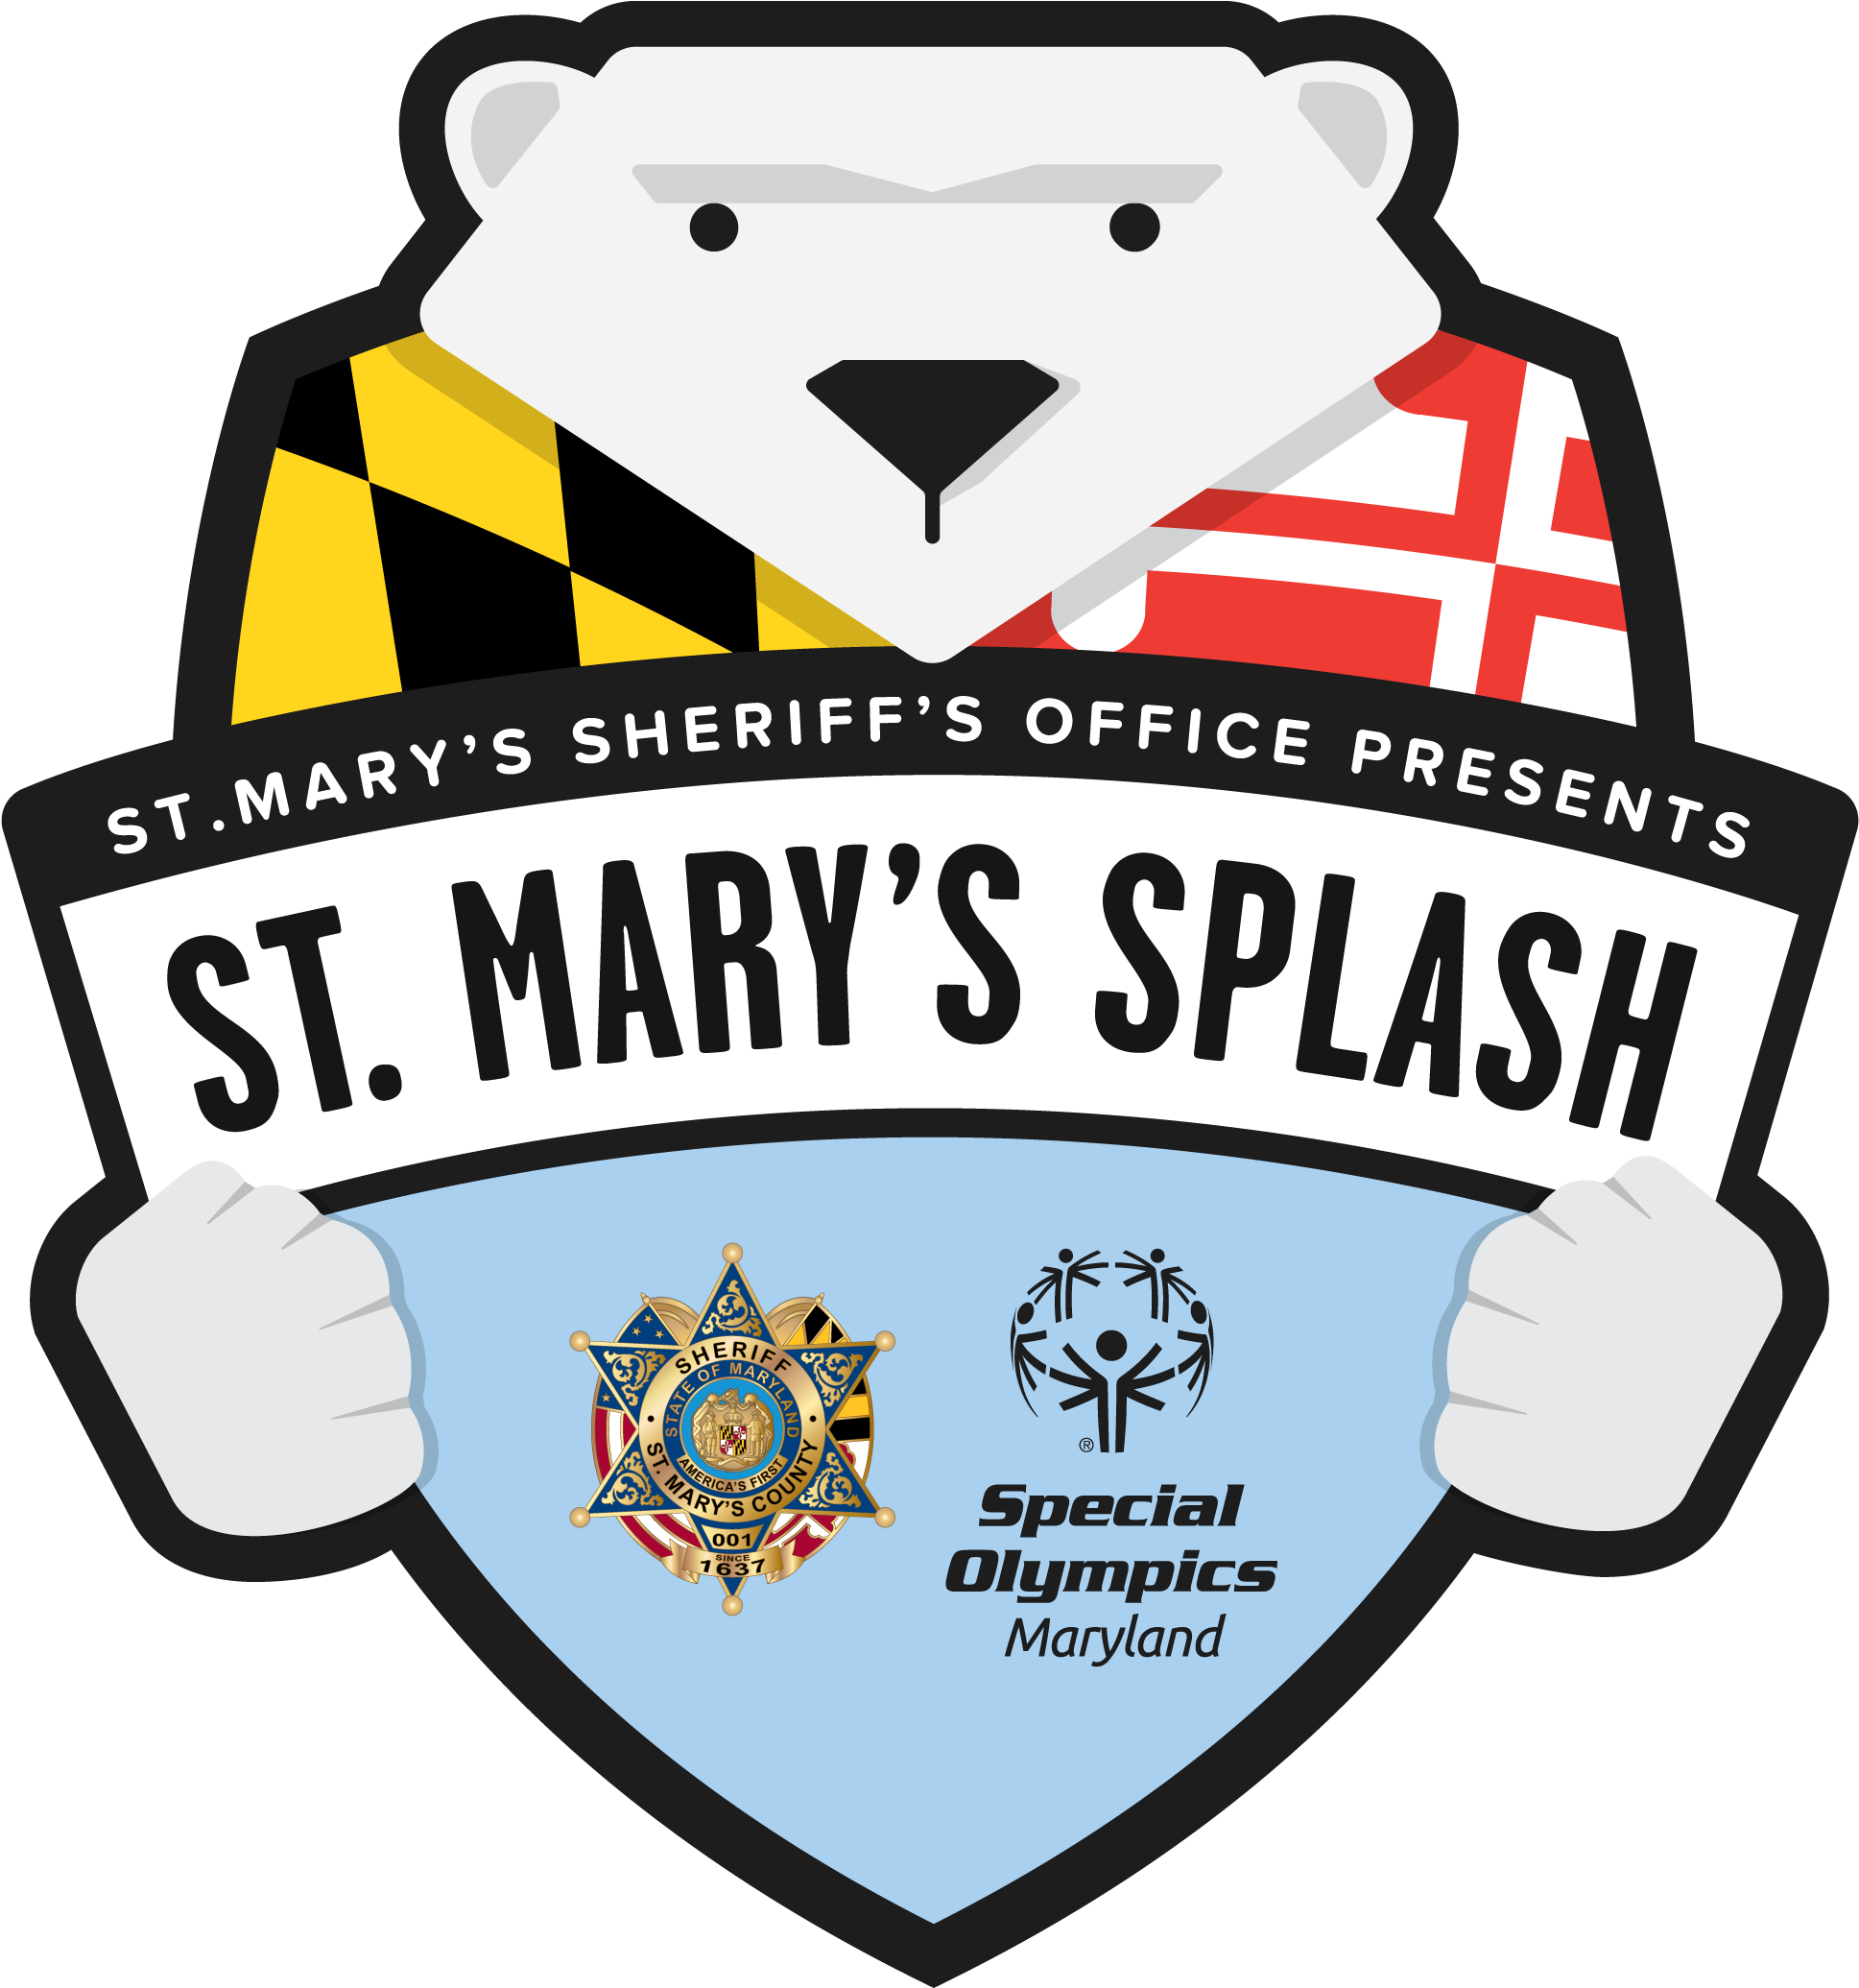 Mary's Splash - Special Olympics (2000x2125)